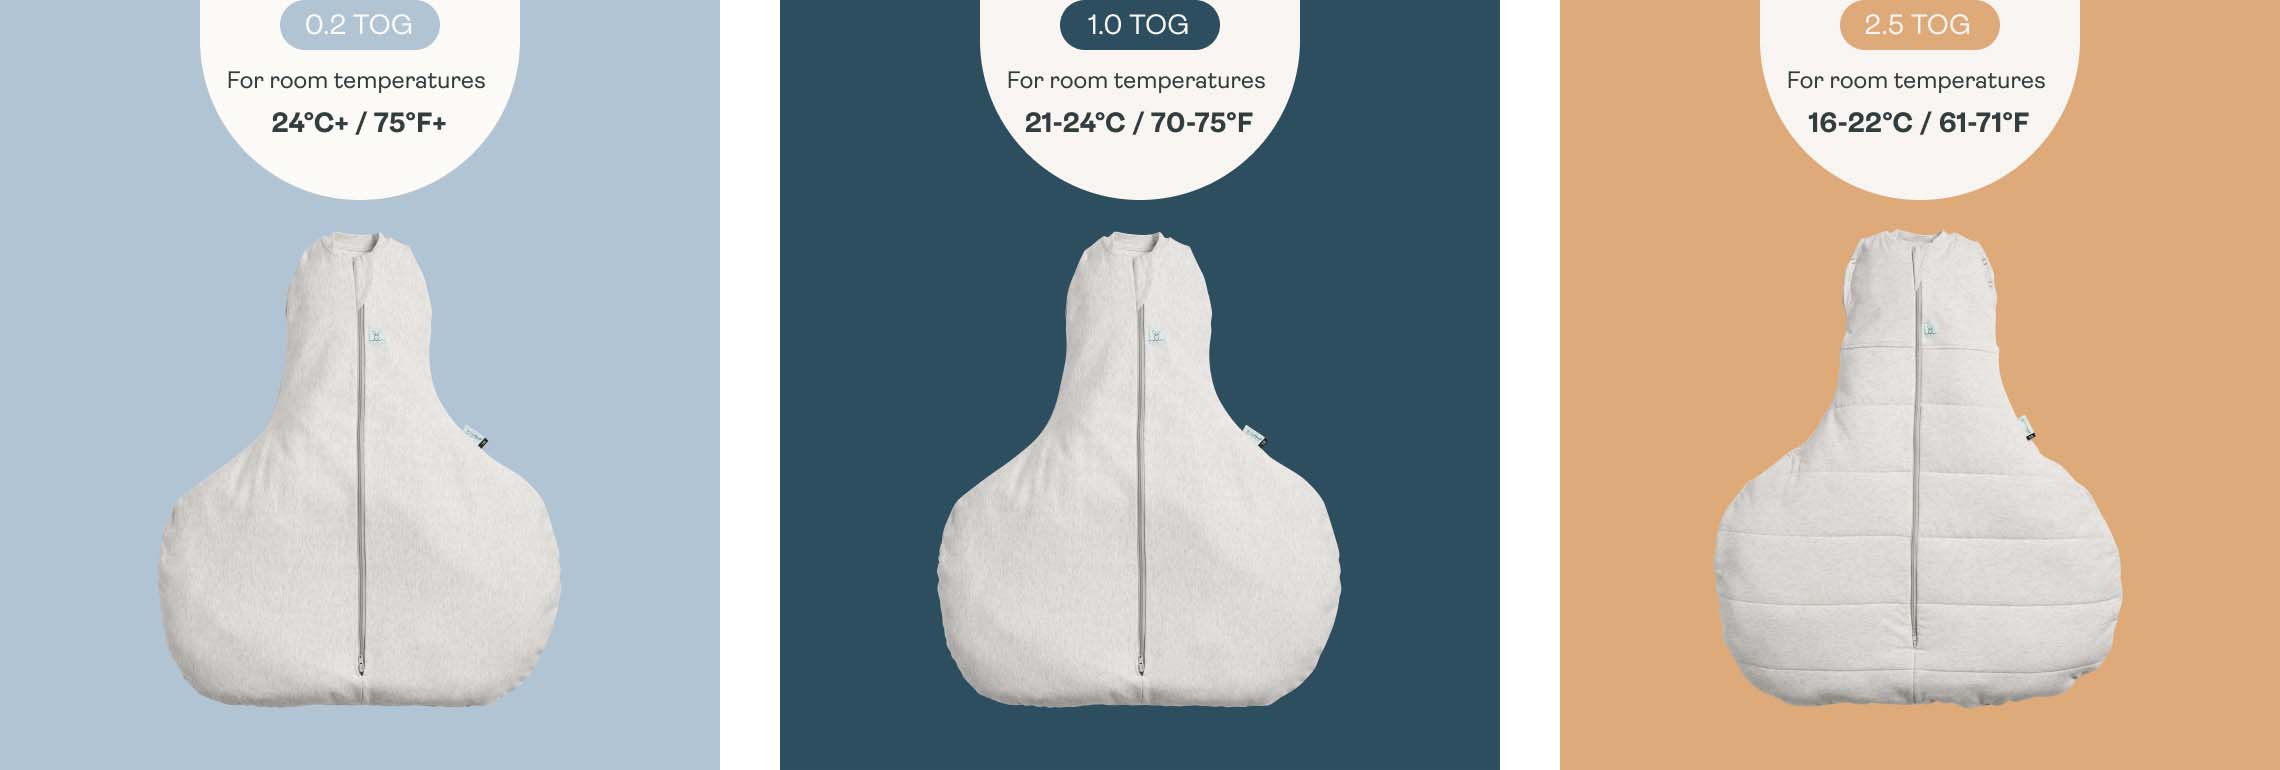 TOG options for Hip Harness Sleeping Bags